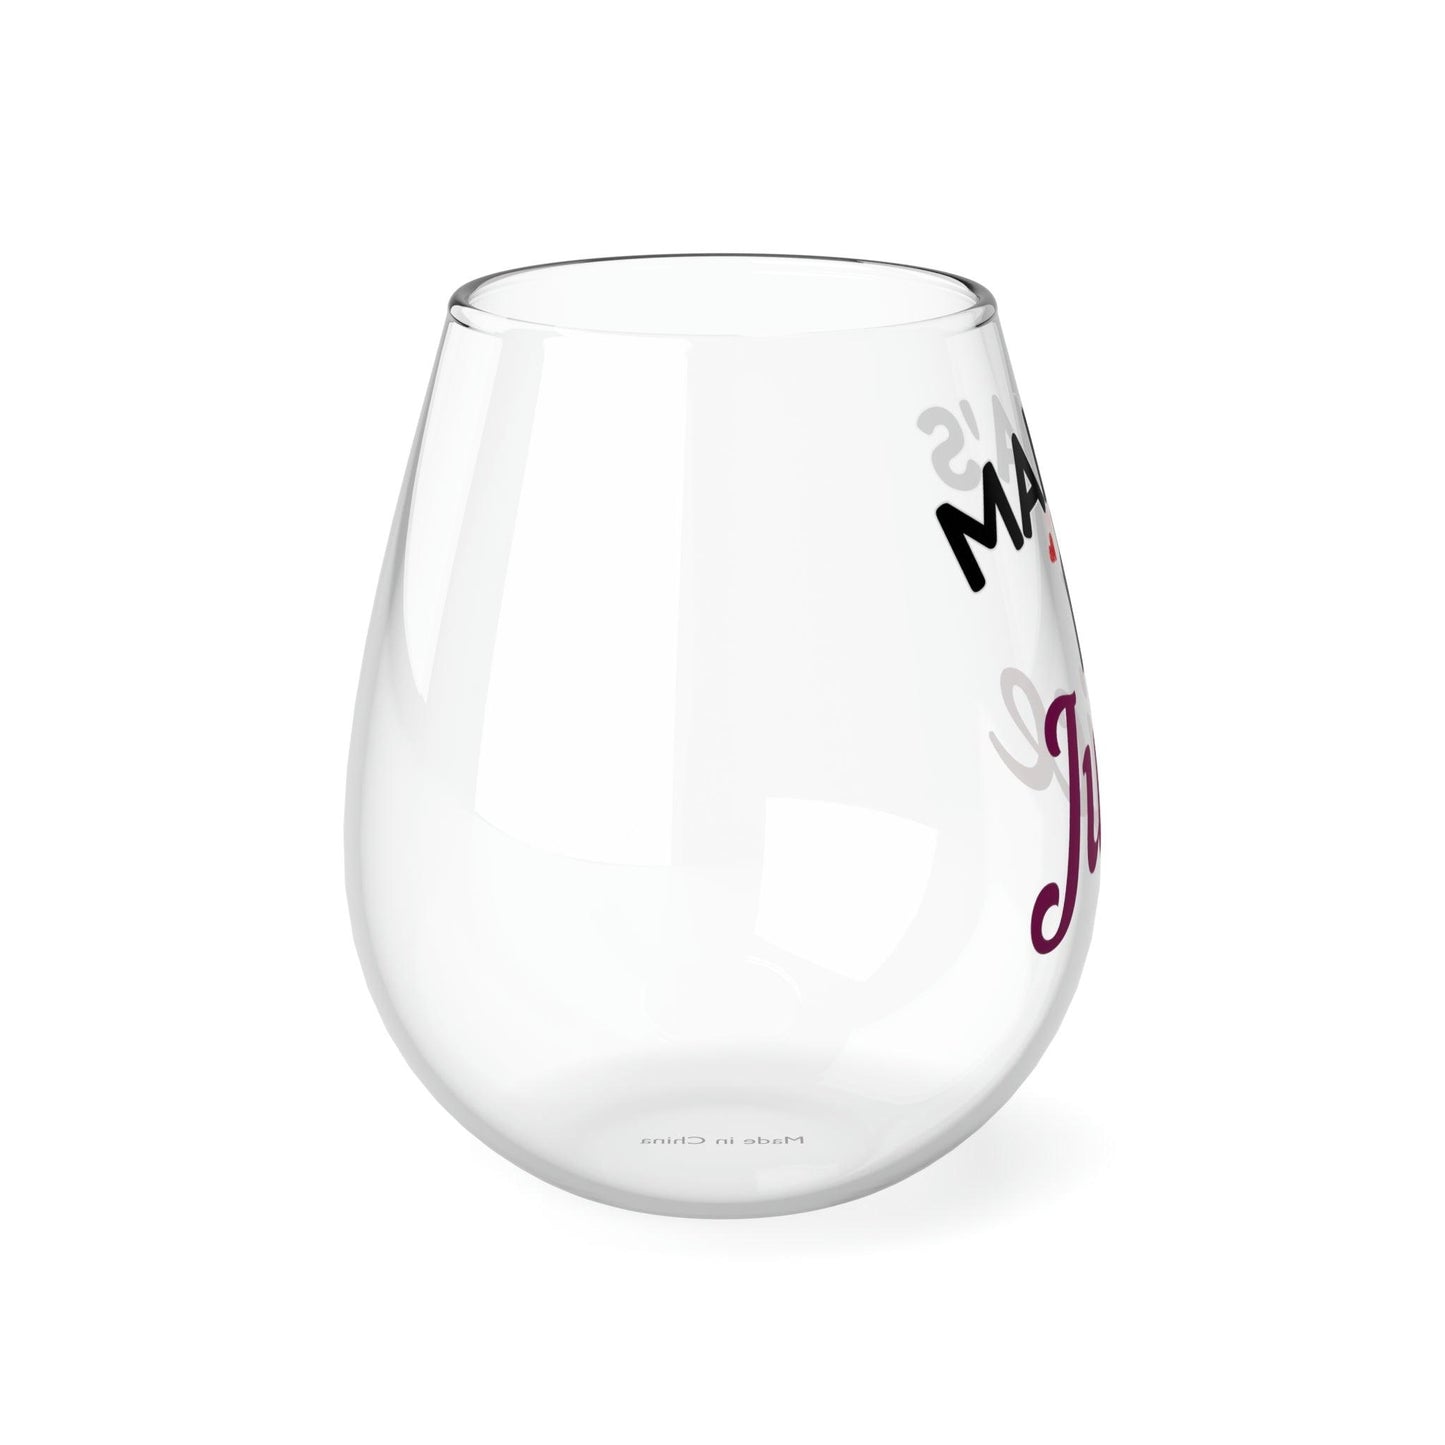 Mom wine glass Mama's Juice Wine Glass - Mother's Day Wine glass Gift for Mom - Giftsmojo